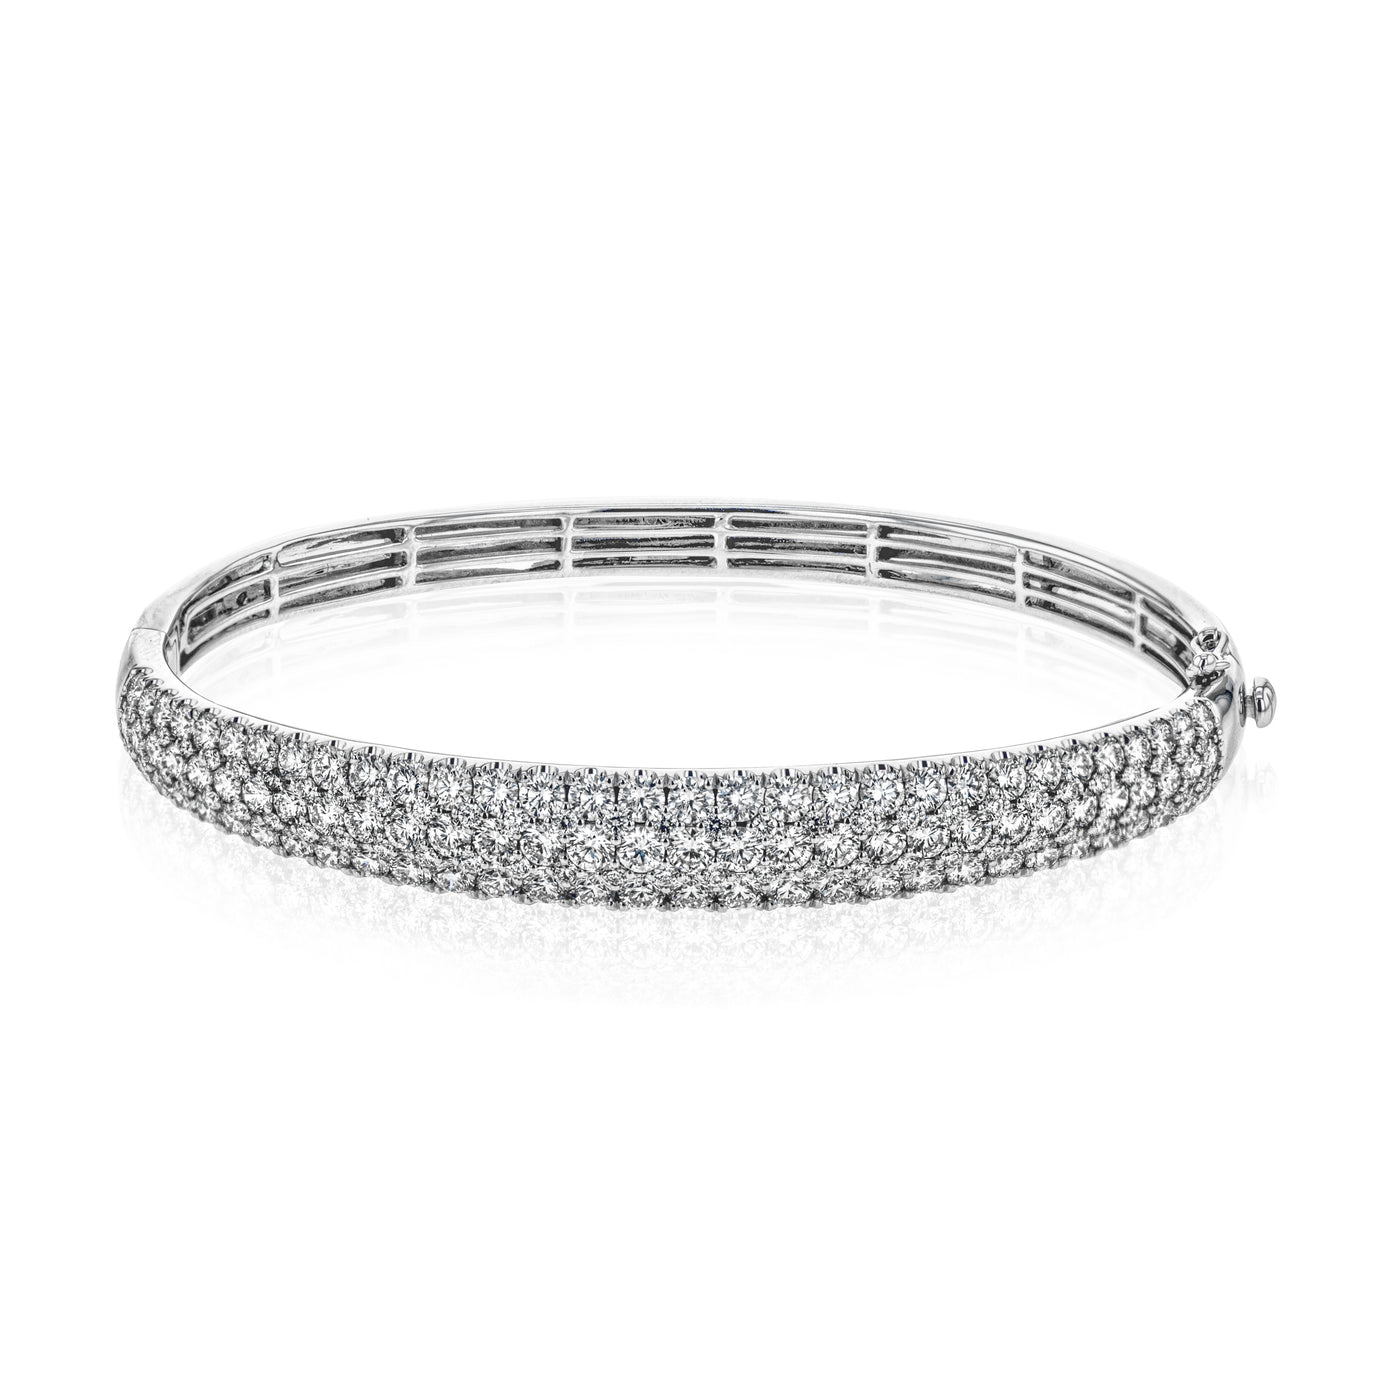 Simon G Jewelry 18 Karat White Diamond Bracelet MB1174-773970